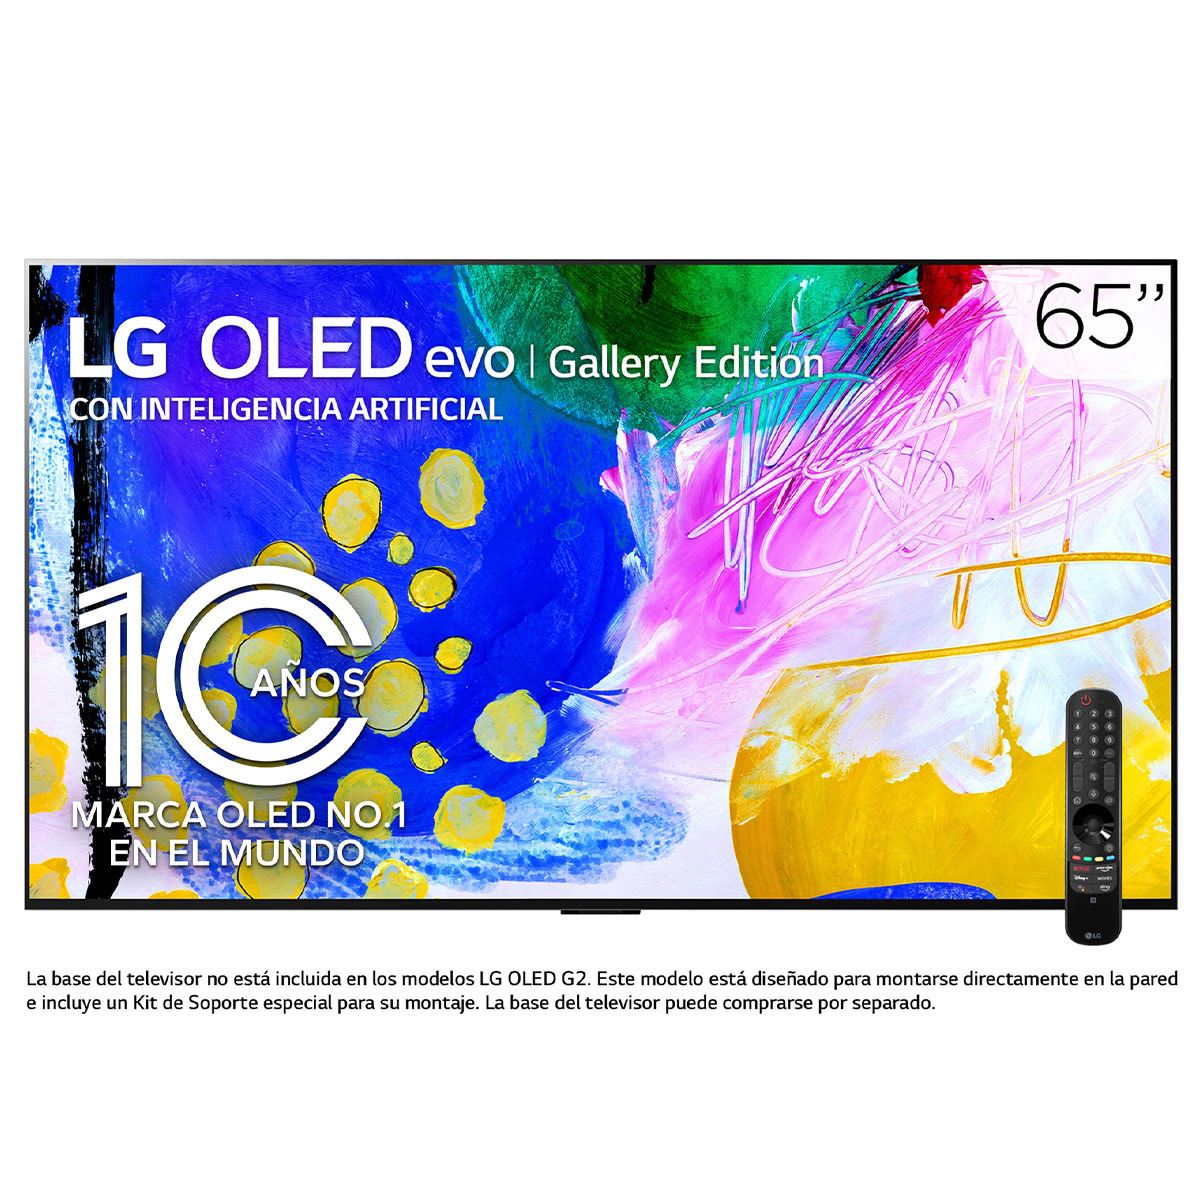 Pantalla LG OLED TV Evo Gallery Edition  65 Pulgadas 4K SMART TV con ThinQ AI